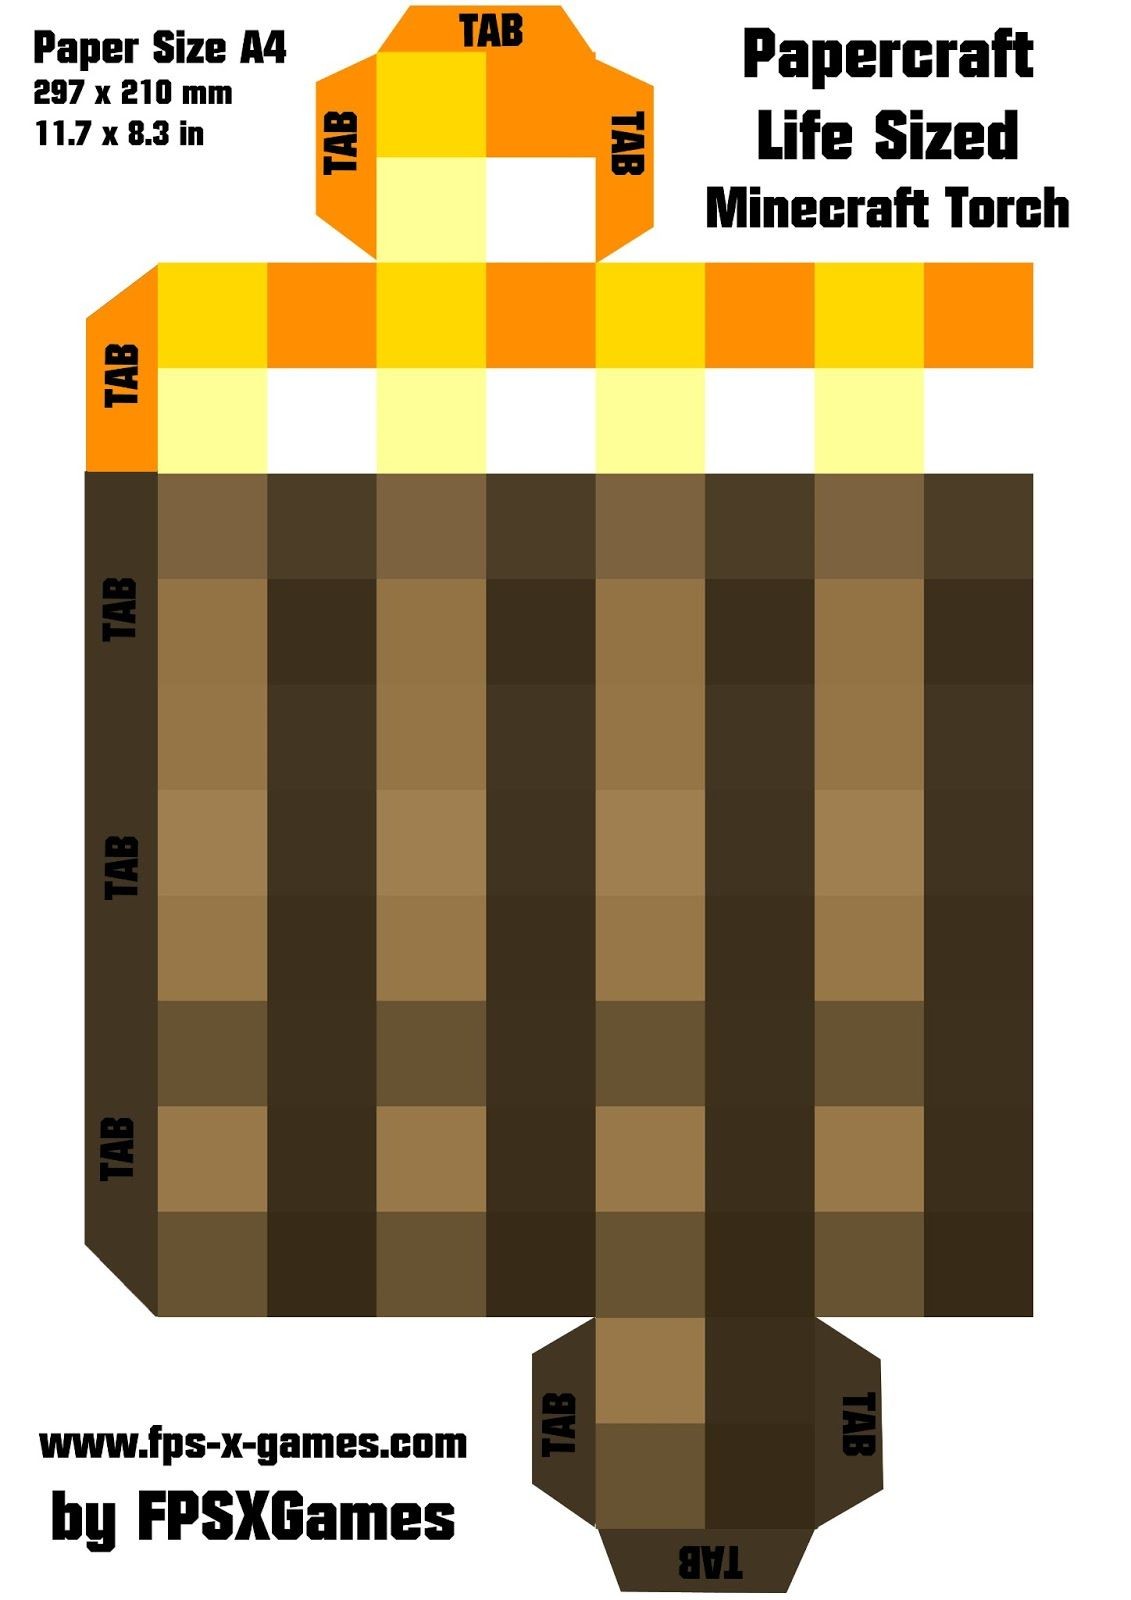 minecraft gold pickaxe template